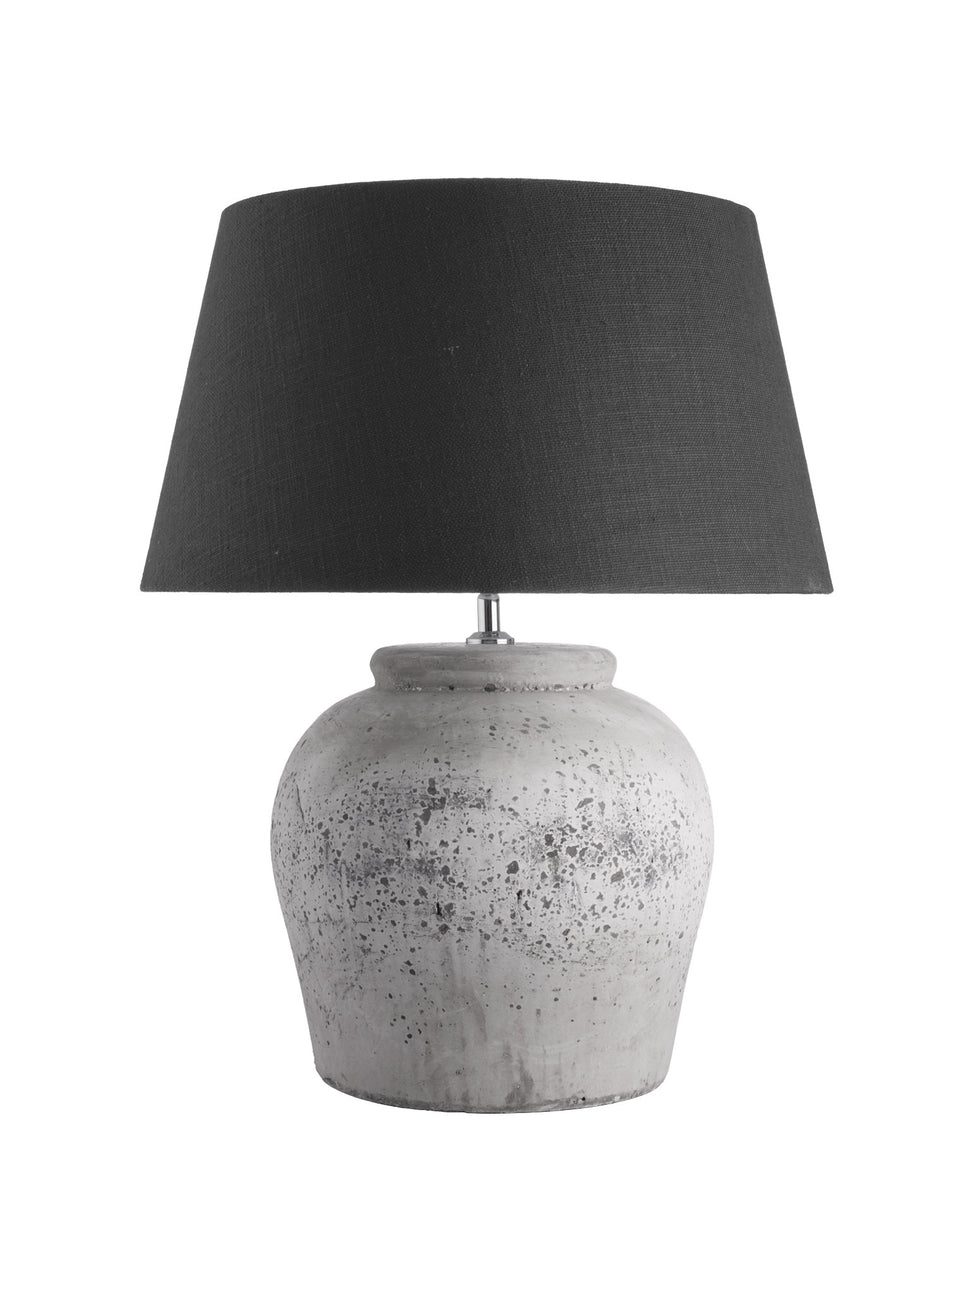 stone lamp base with grey shade